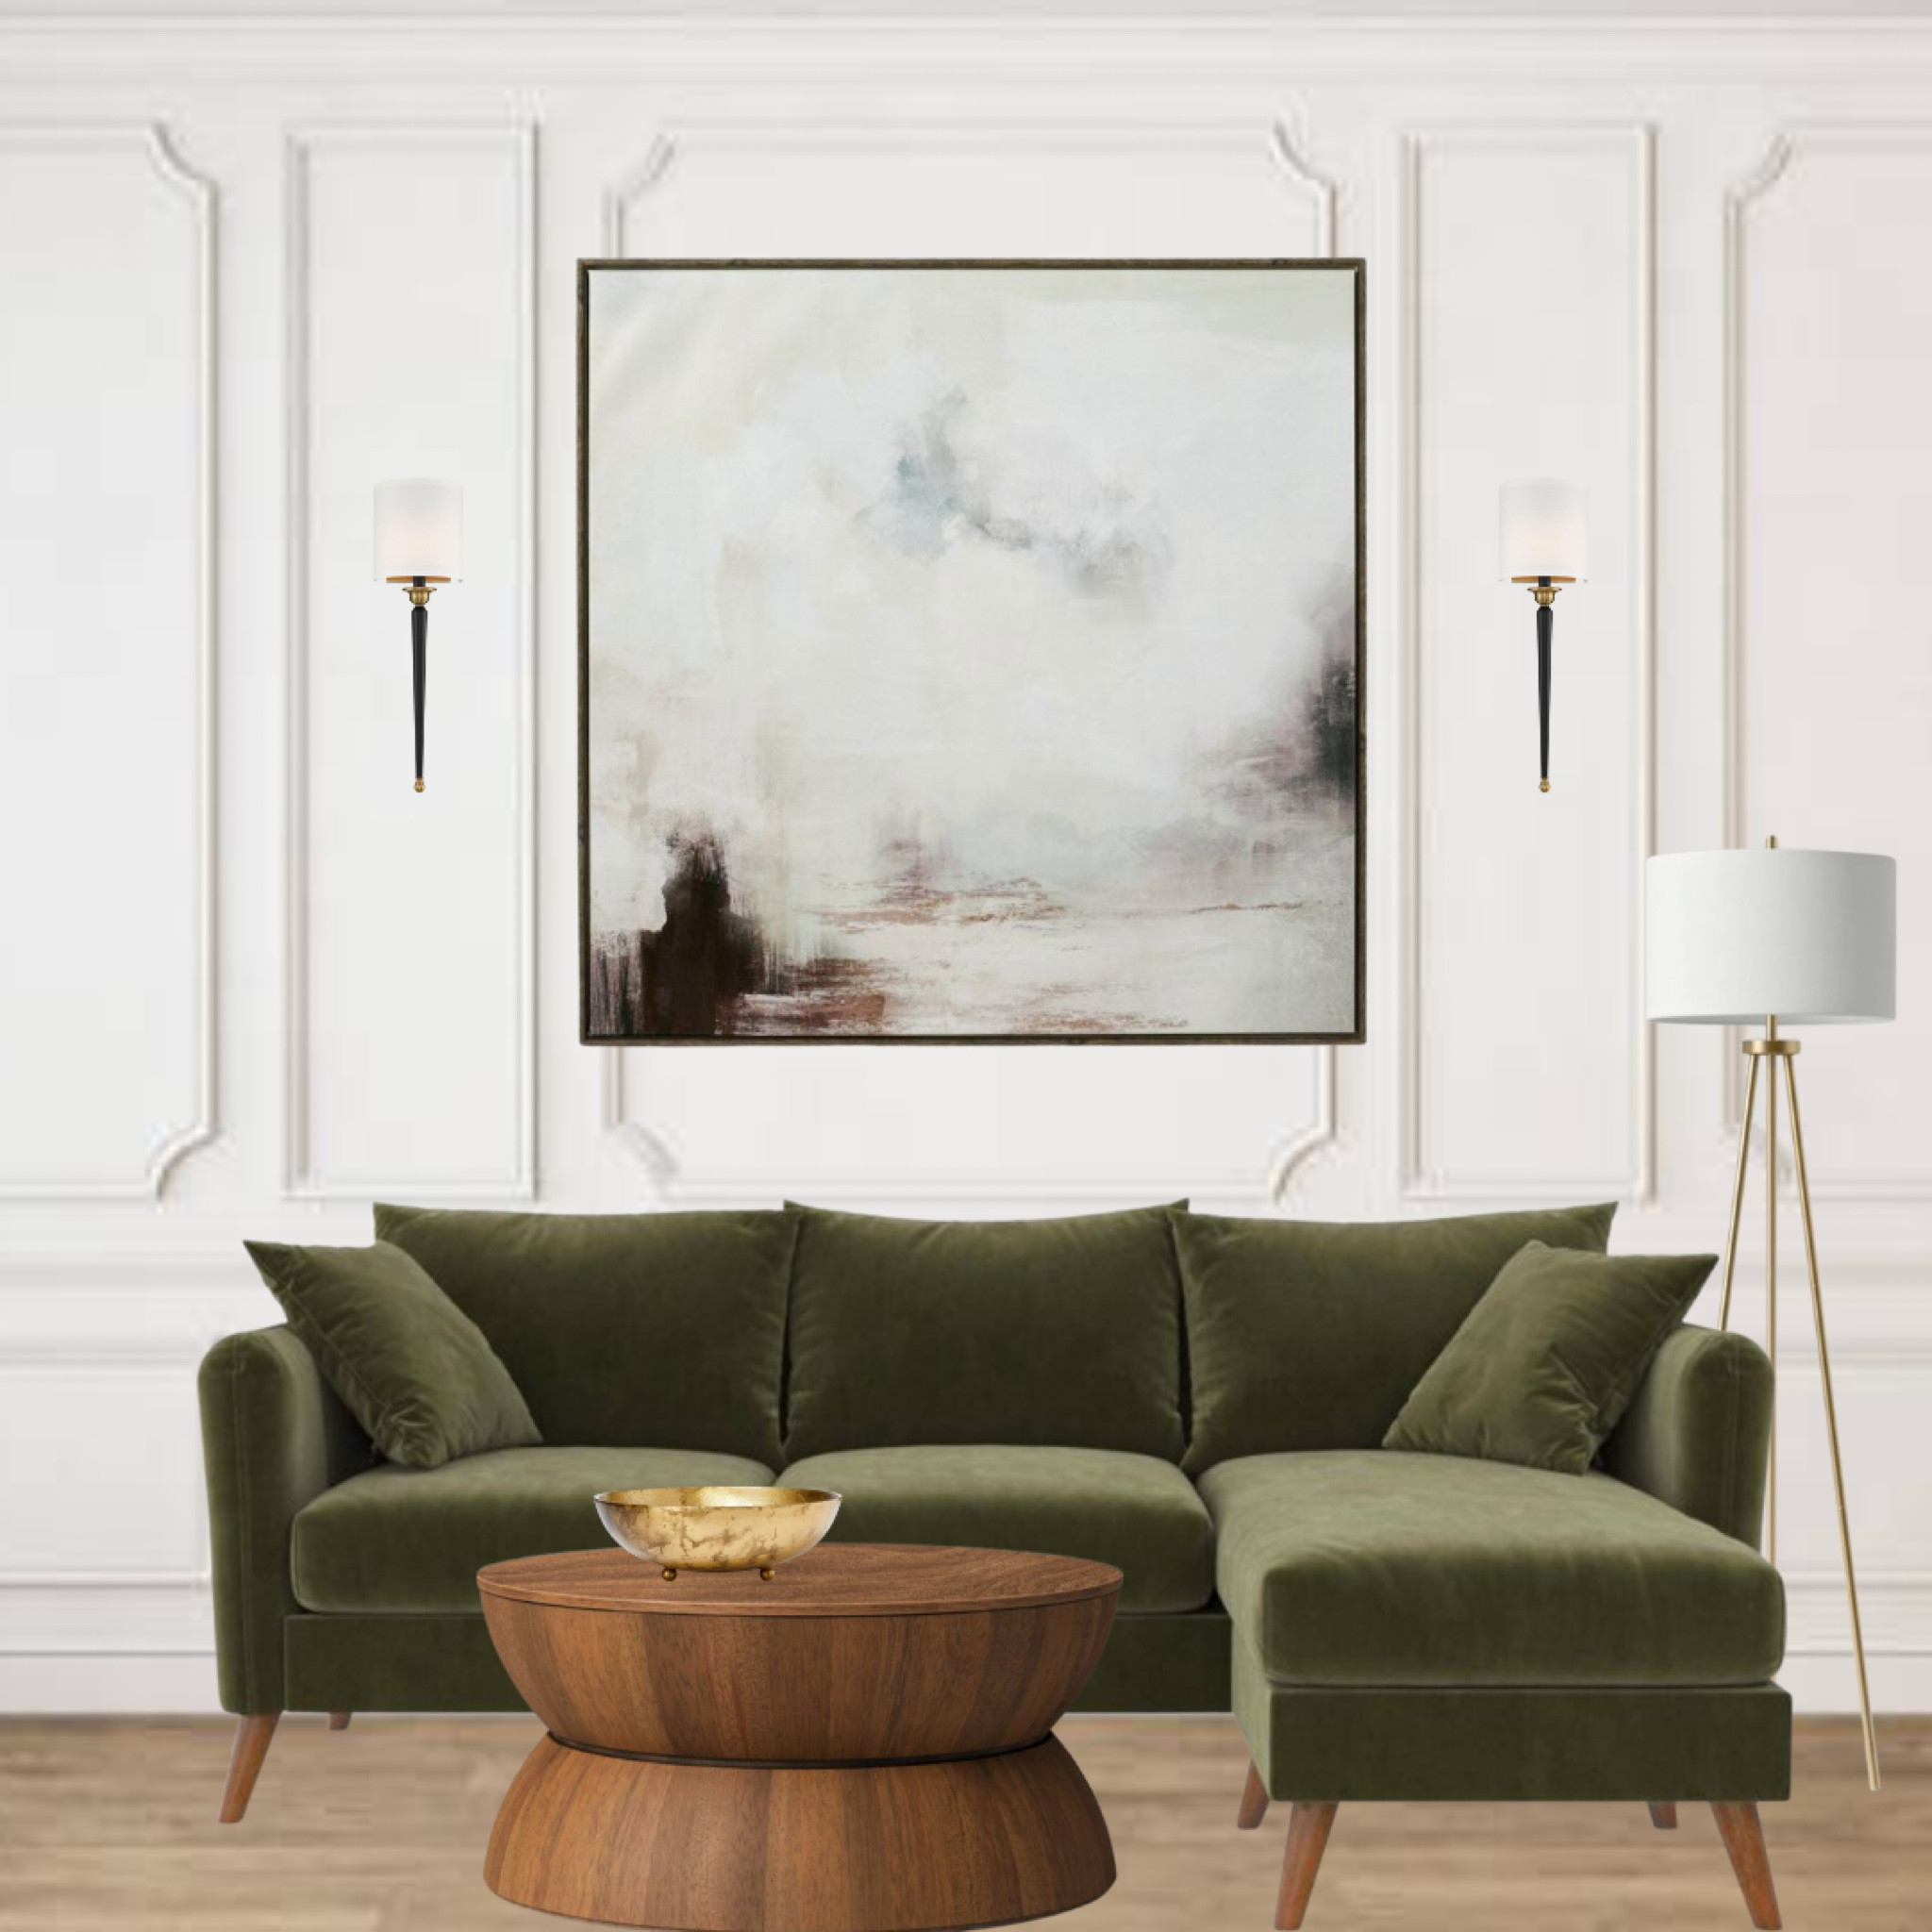 Magnolia Sectional Sofa With Pillows Light Gray Velvet - Novogratz